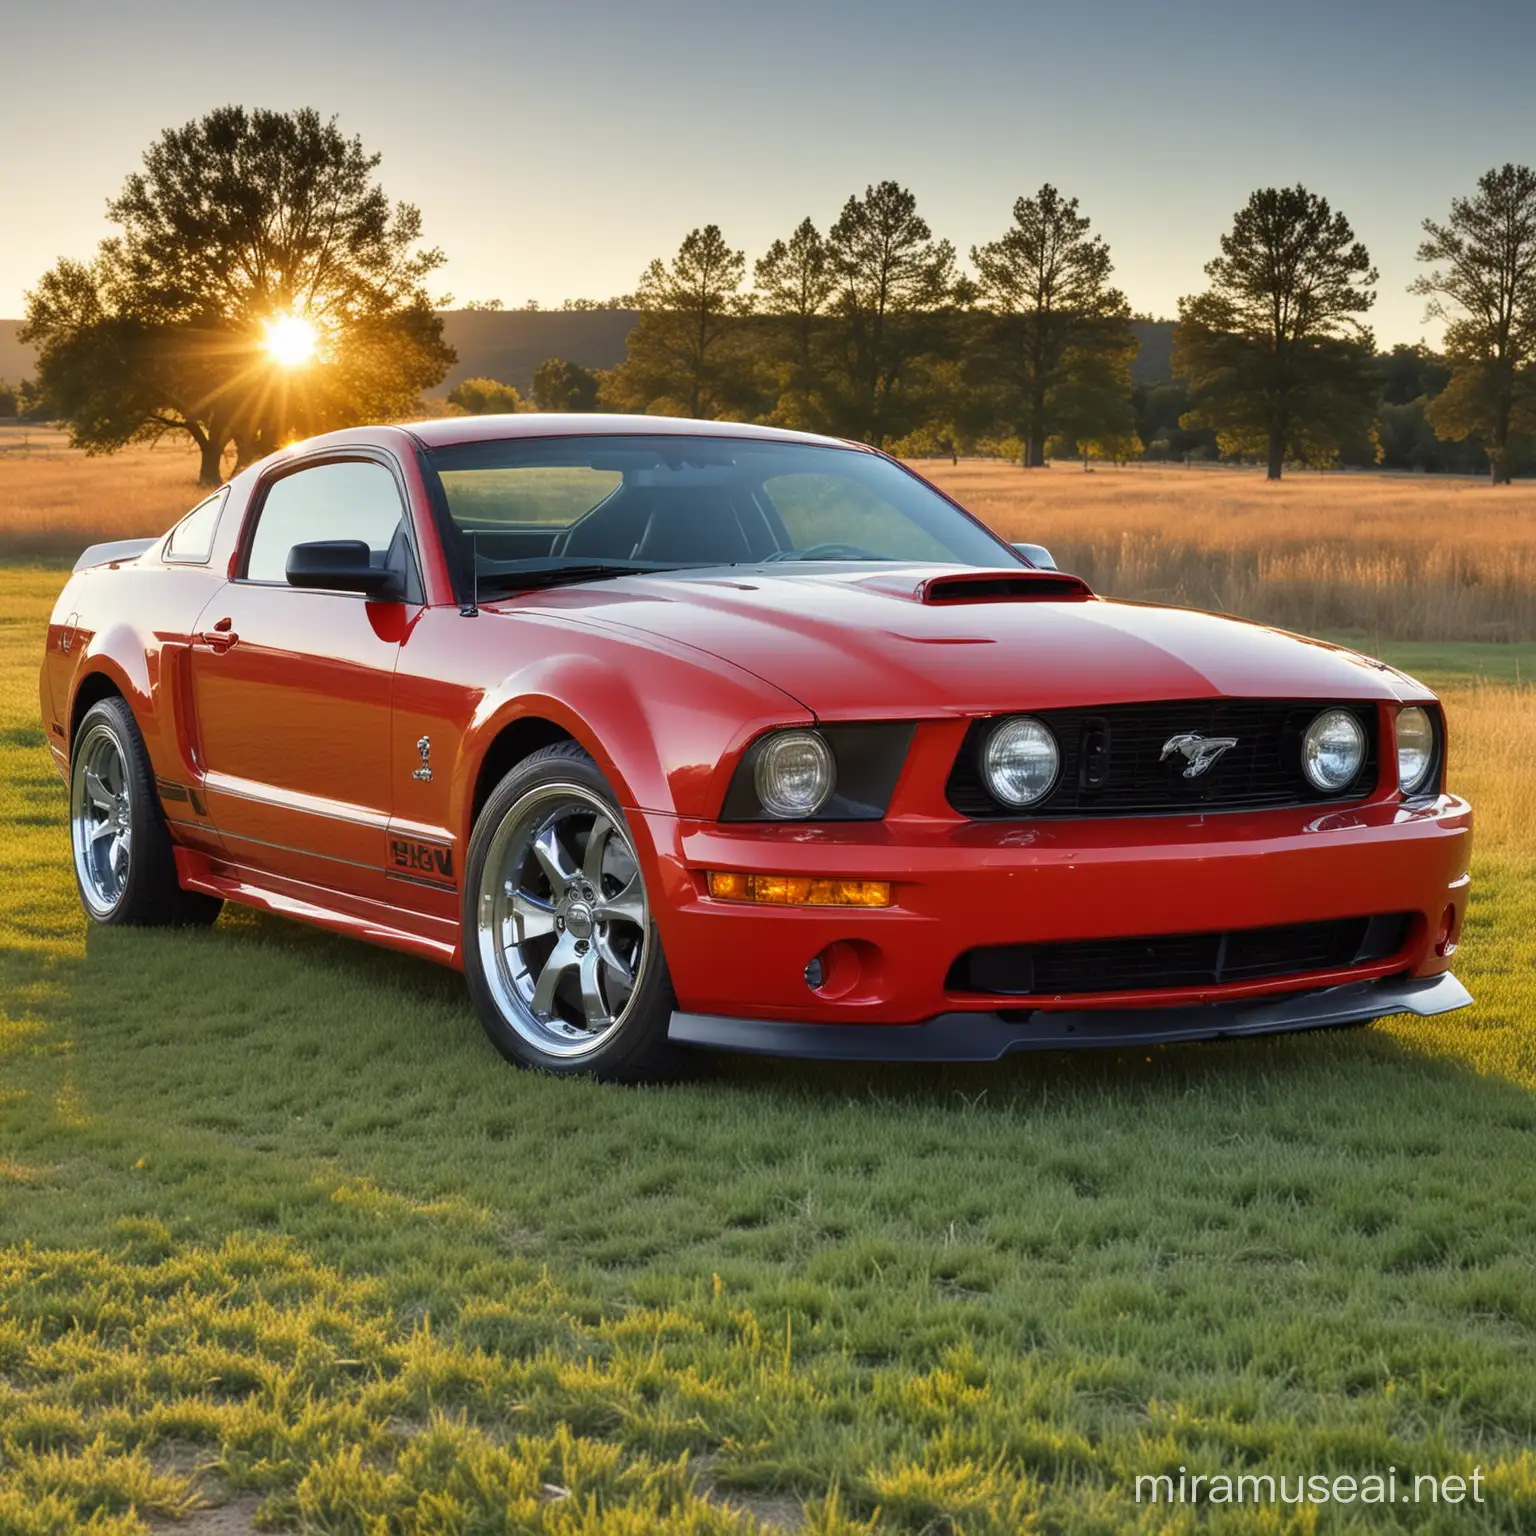 Sunny Field with 2005 Mustang GTS Showcasing Sleek Design